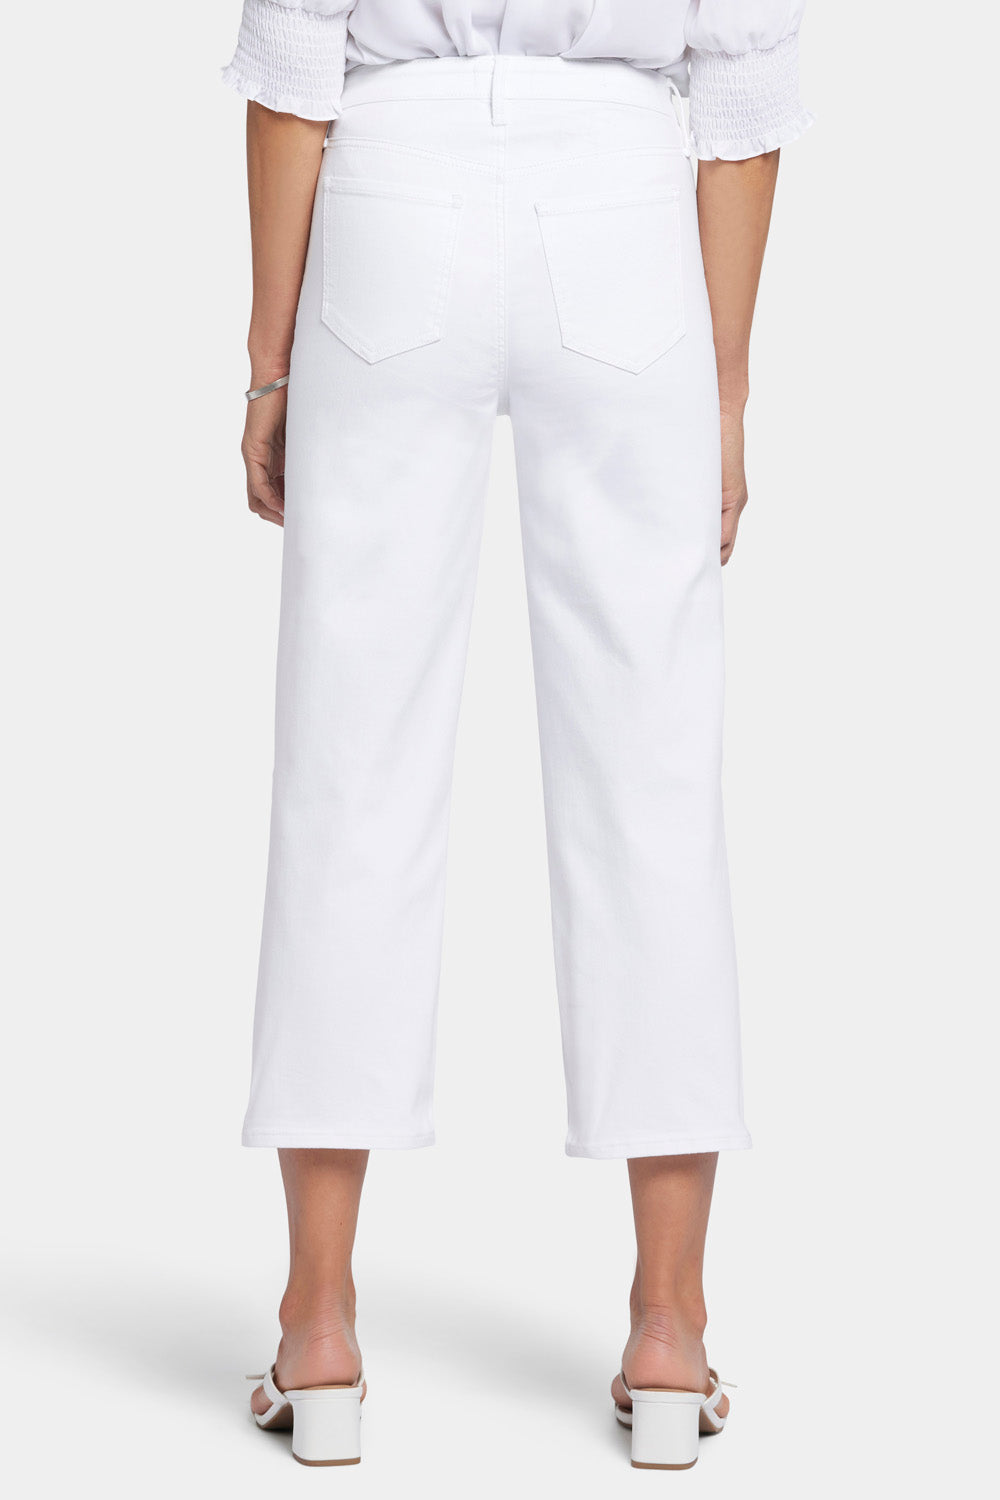 NYDJ Joni Relaxed Capri Jeans With High Rise - Optic White